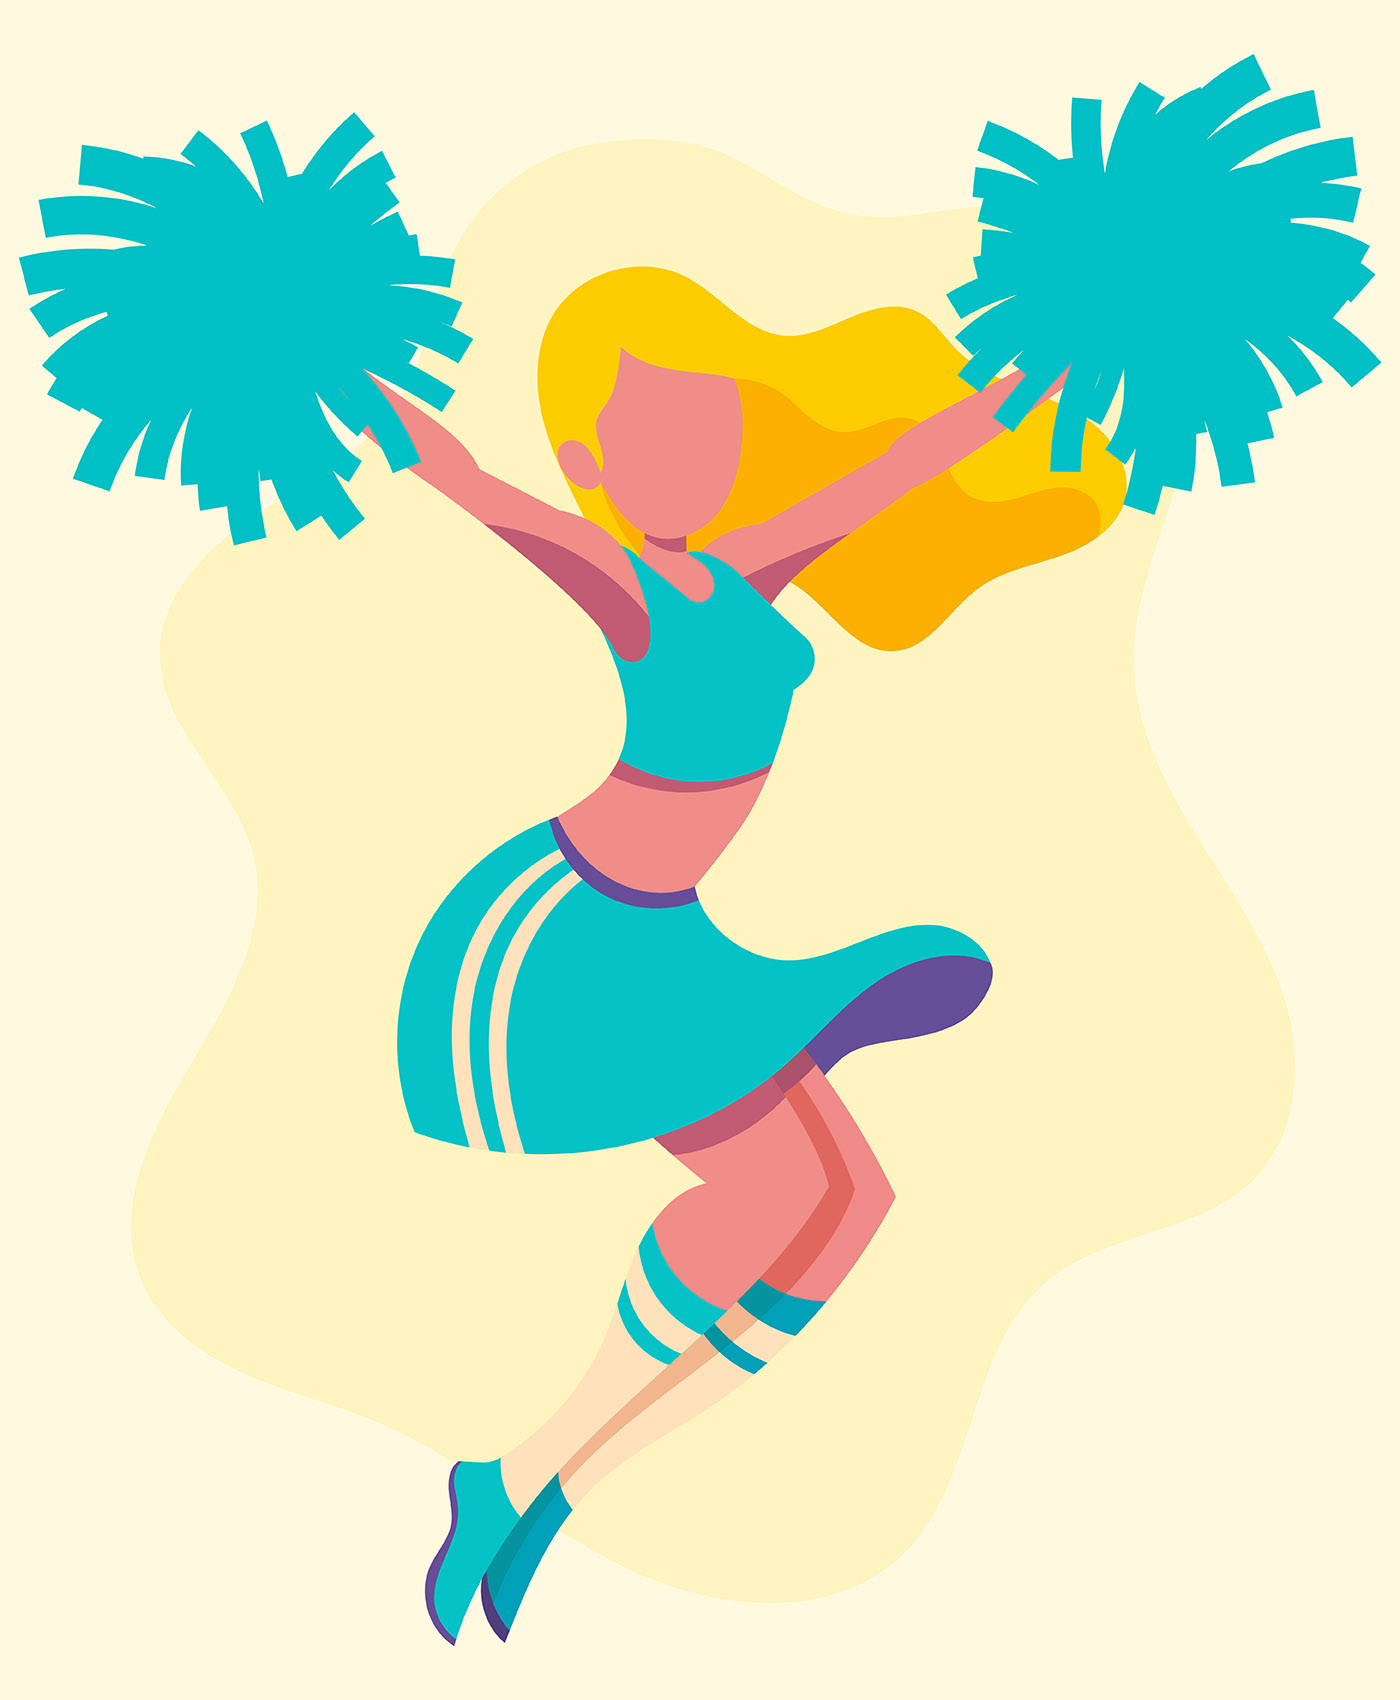 Cheerleader Illustration 259355 Download Free Vectors Clipart Graphics & Vector Art